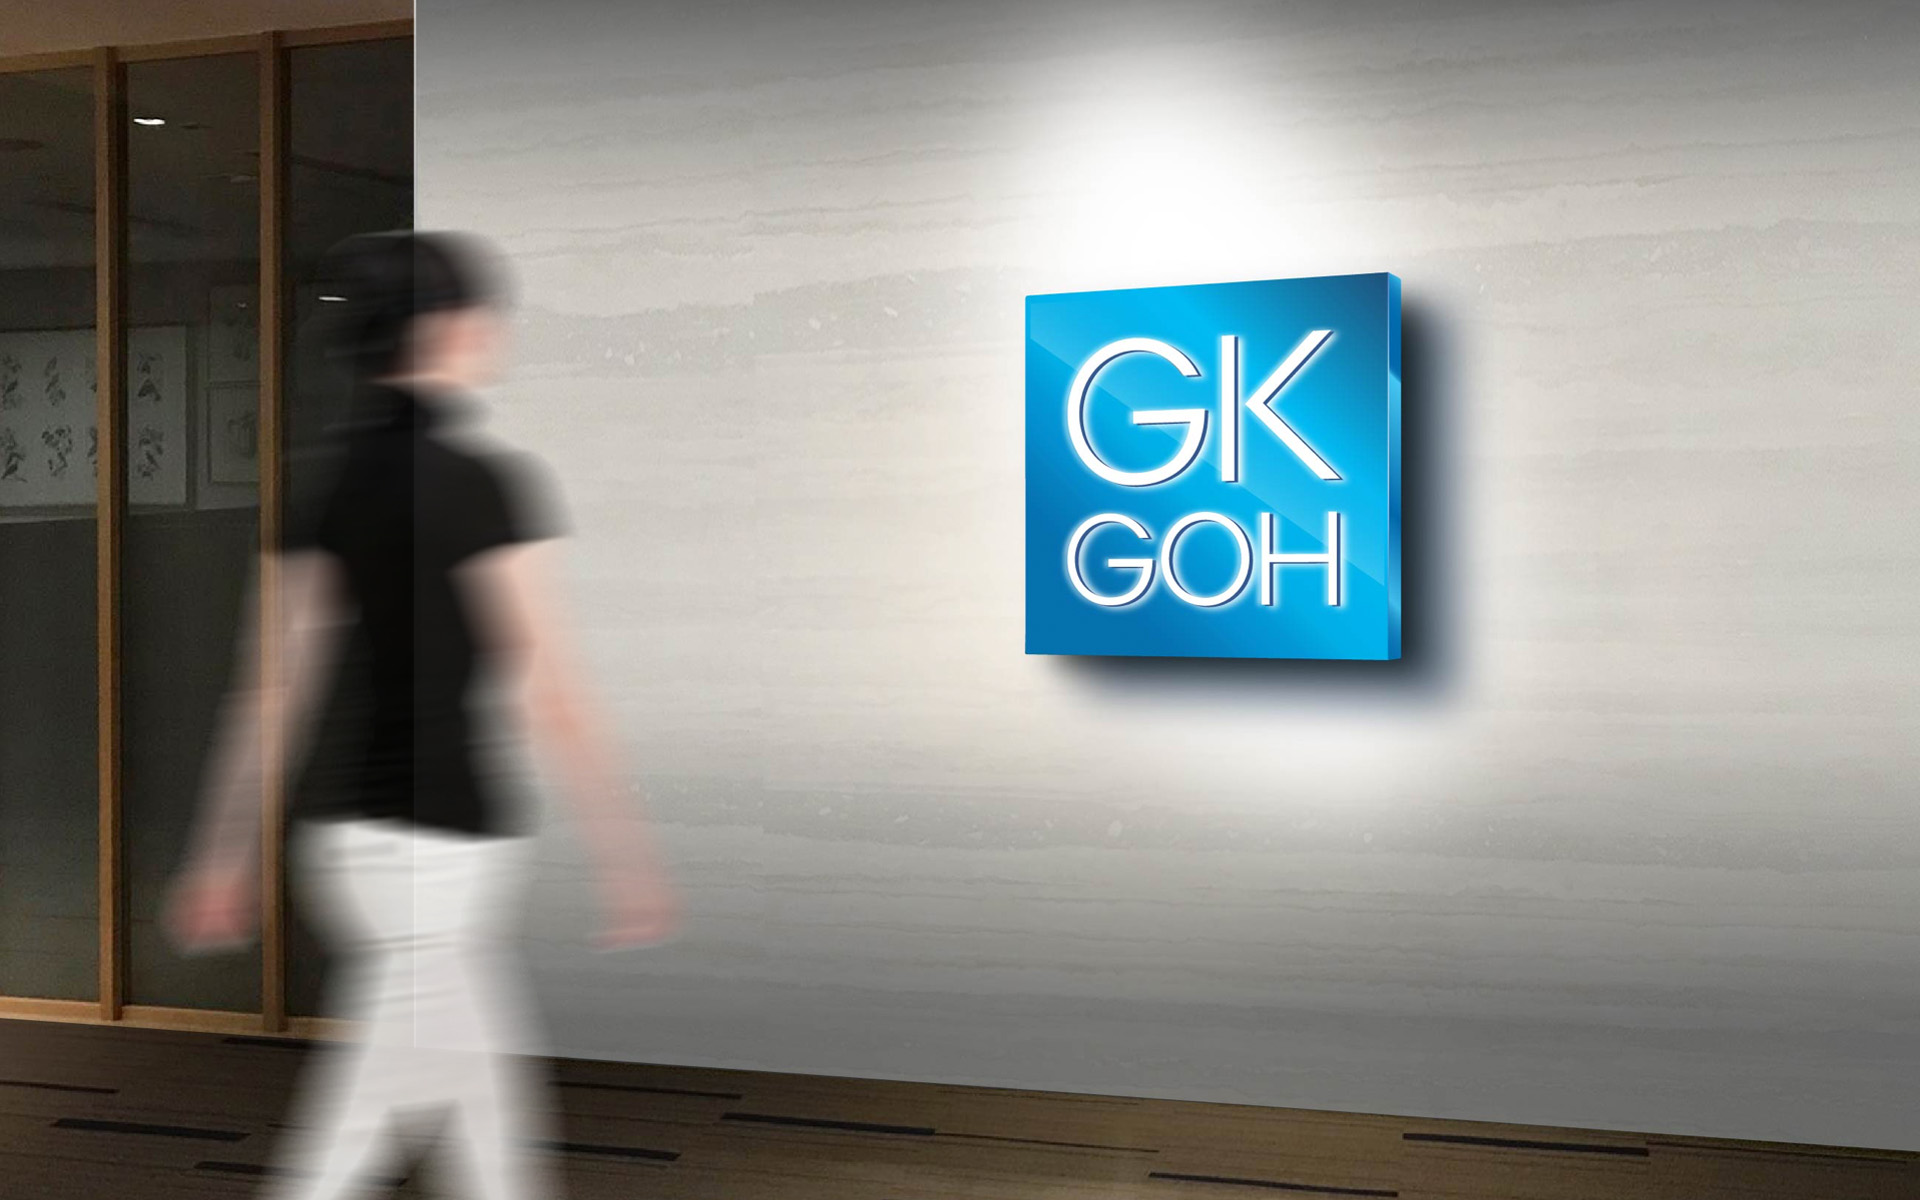 G.K. Goh